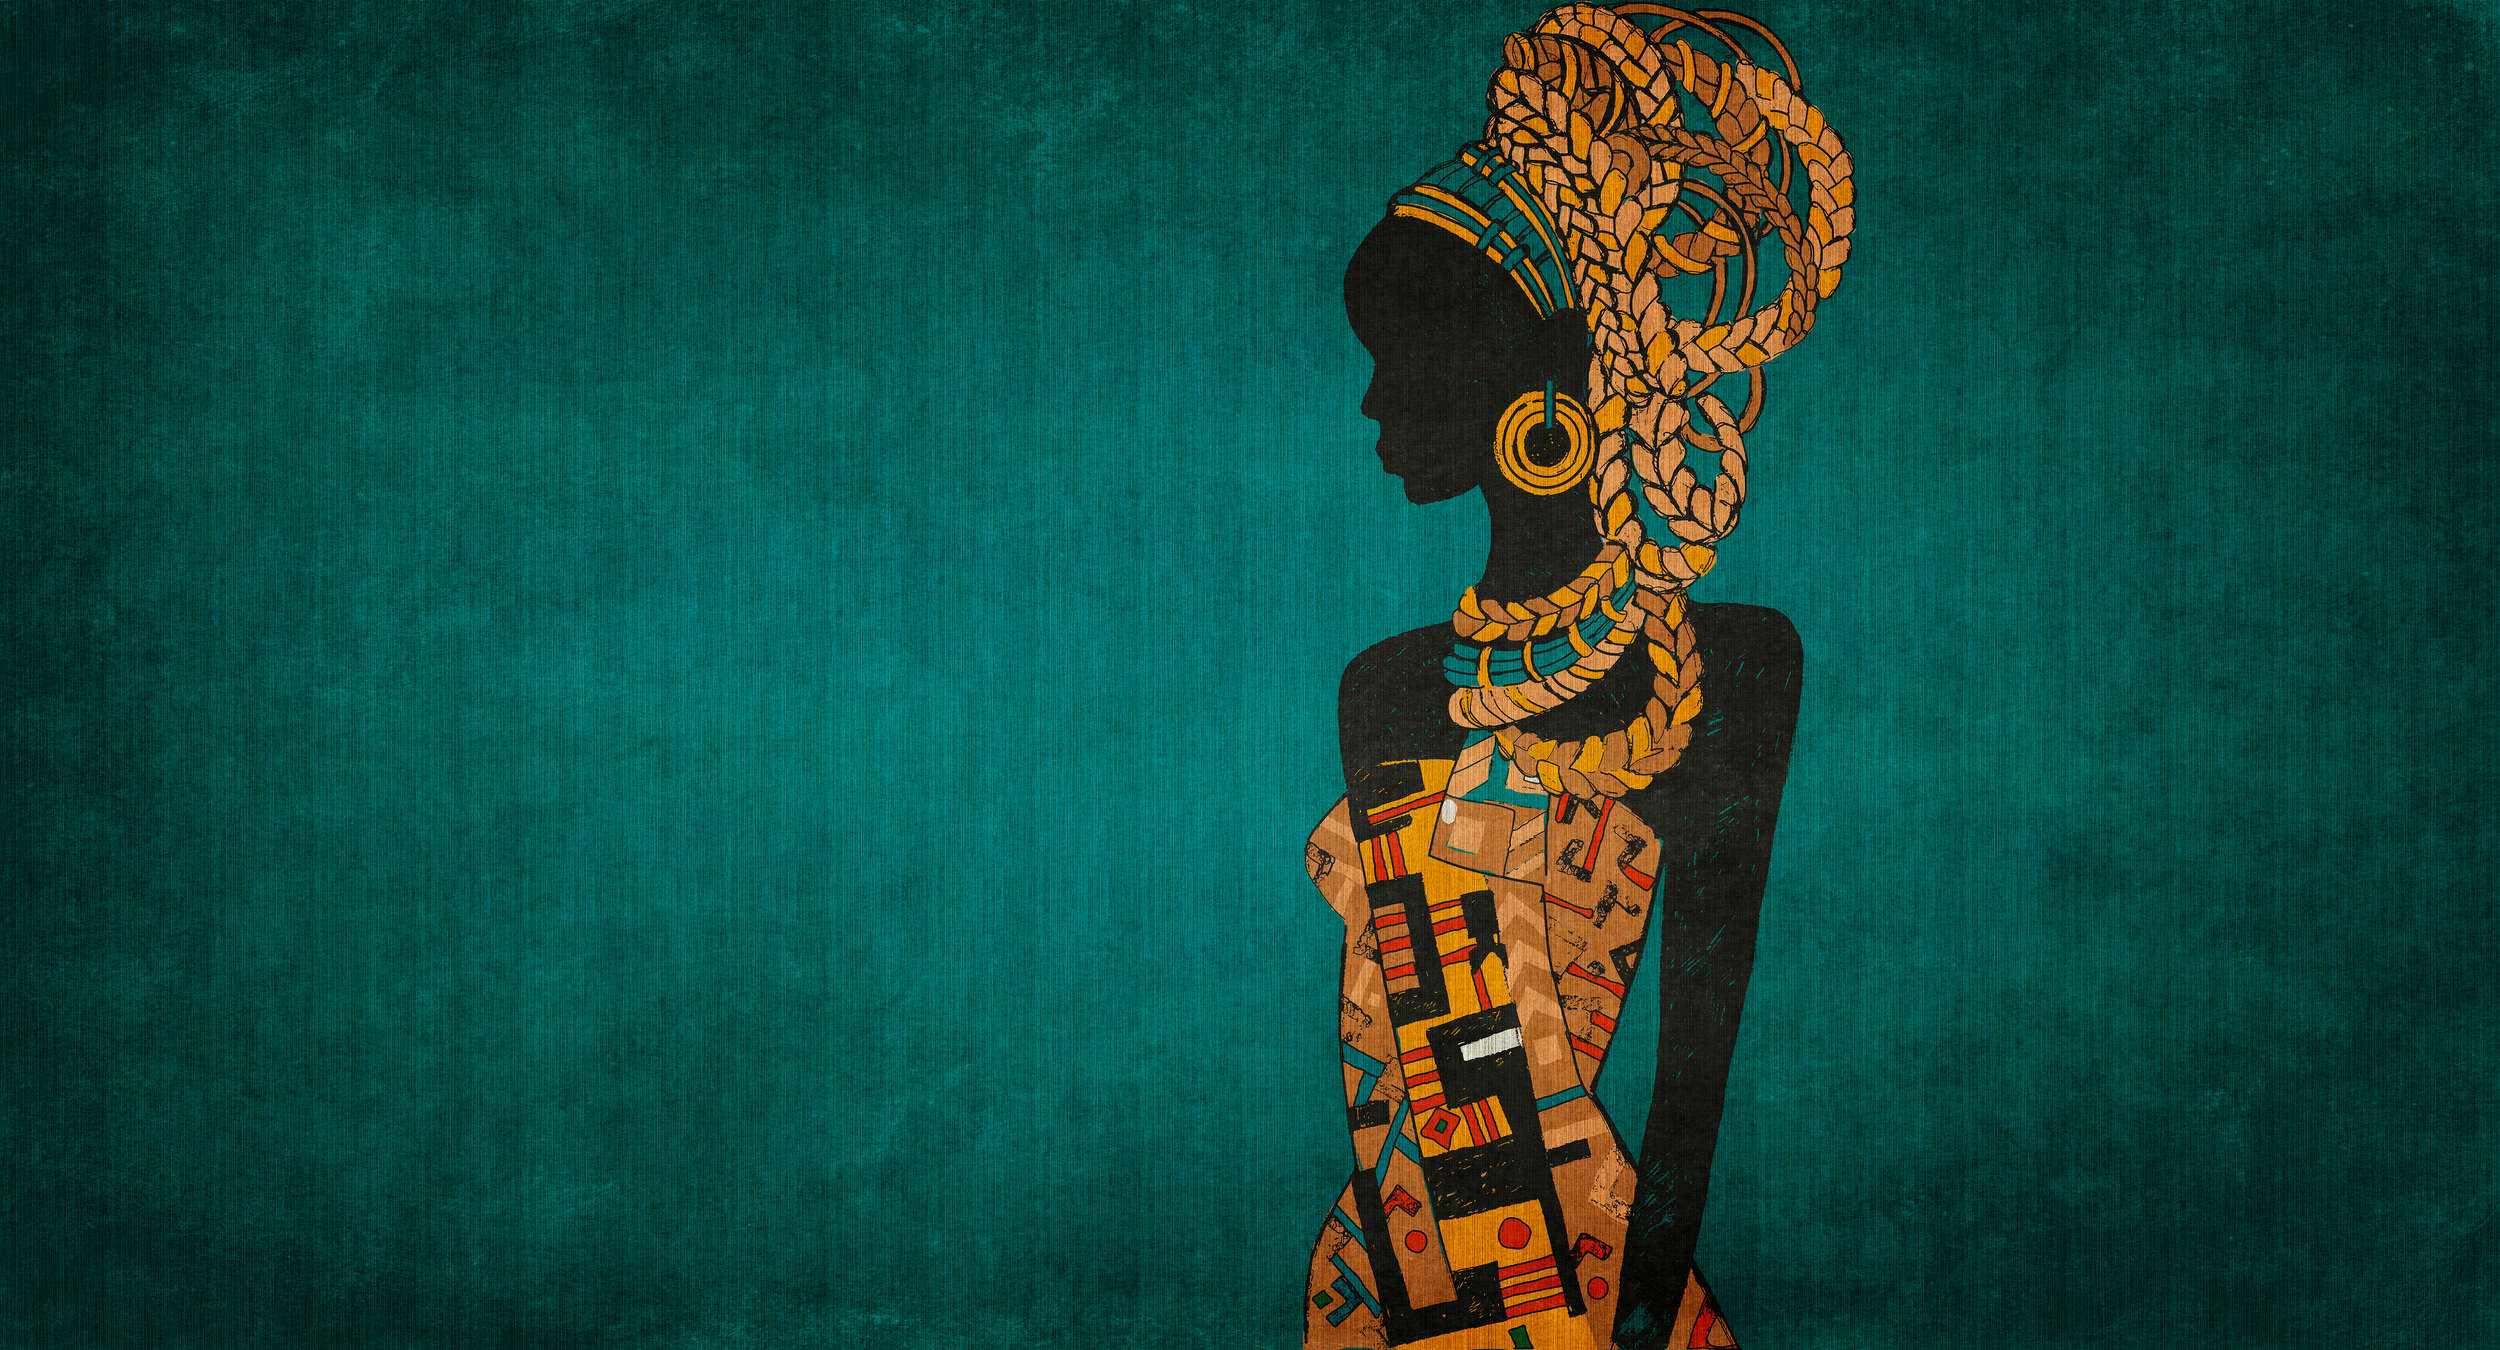             Nairobi 2 - Behang in Afrikaanse stijl Petrol met vrouwen Sillouette
        